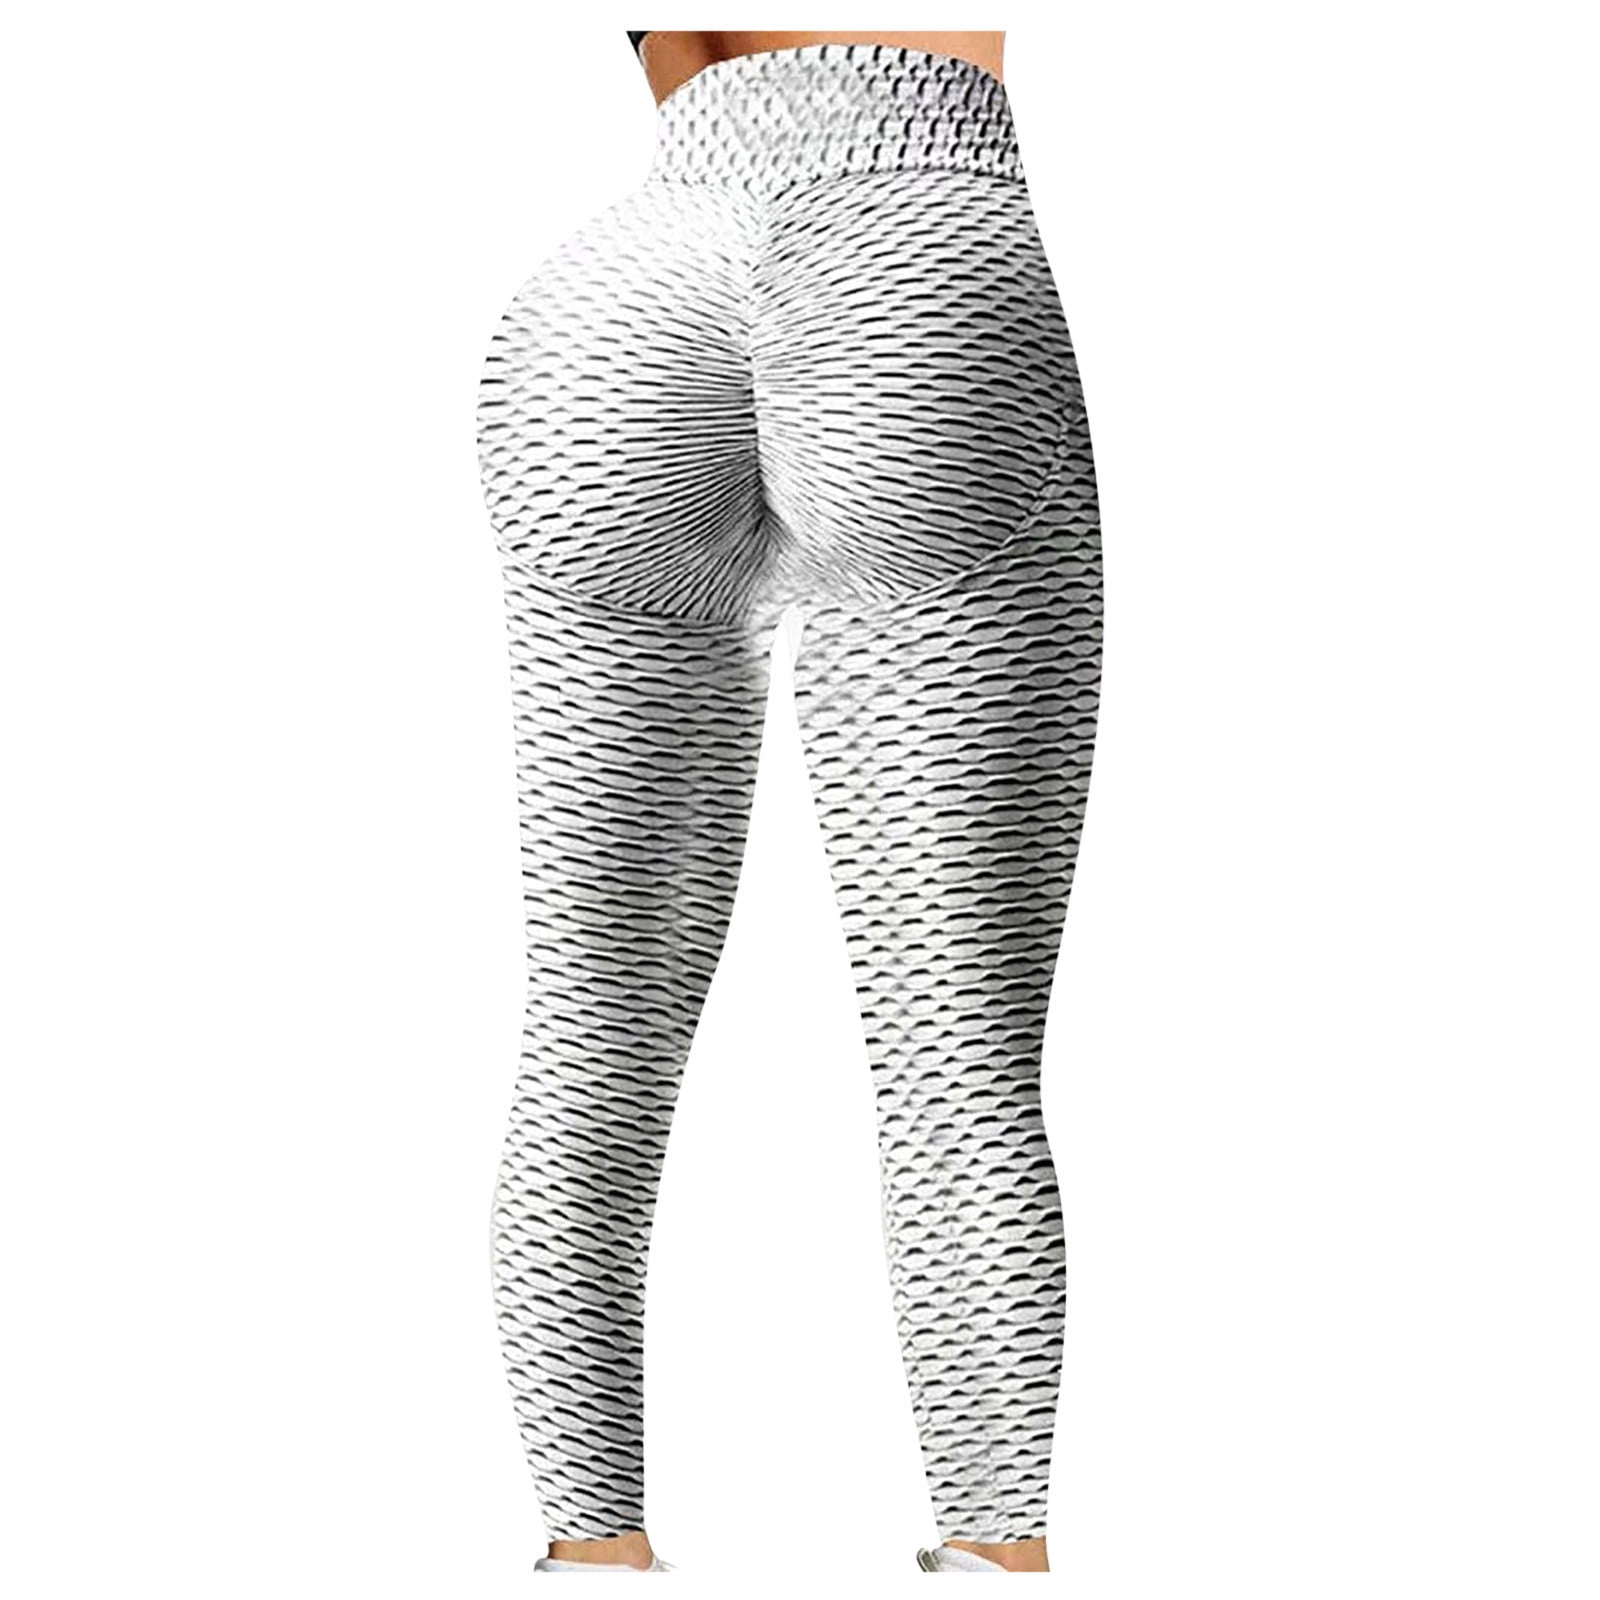 KaLI_store Yoga Pants Women's Scrunch Leggings High Waisted